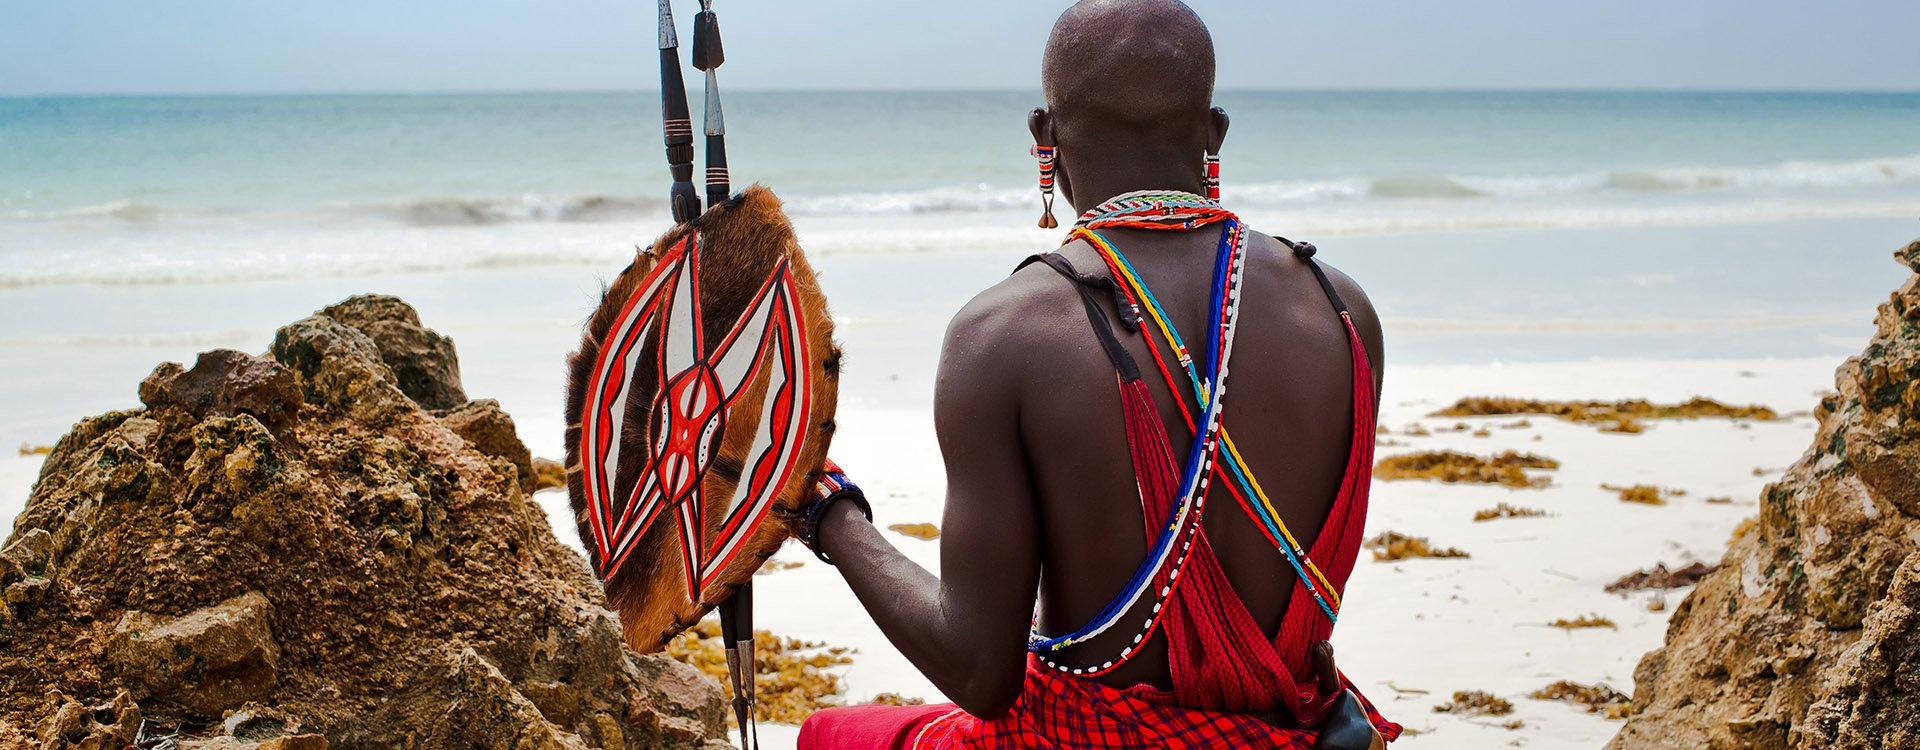 Maasai warrior in Africa. Tribe, Diani beach